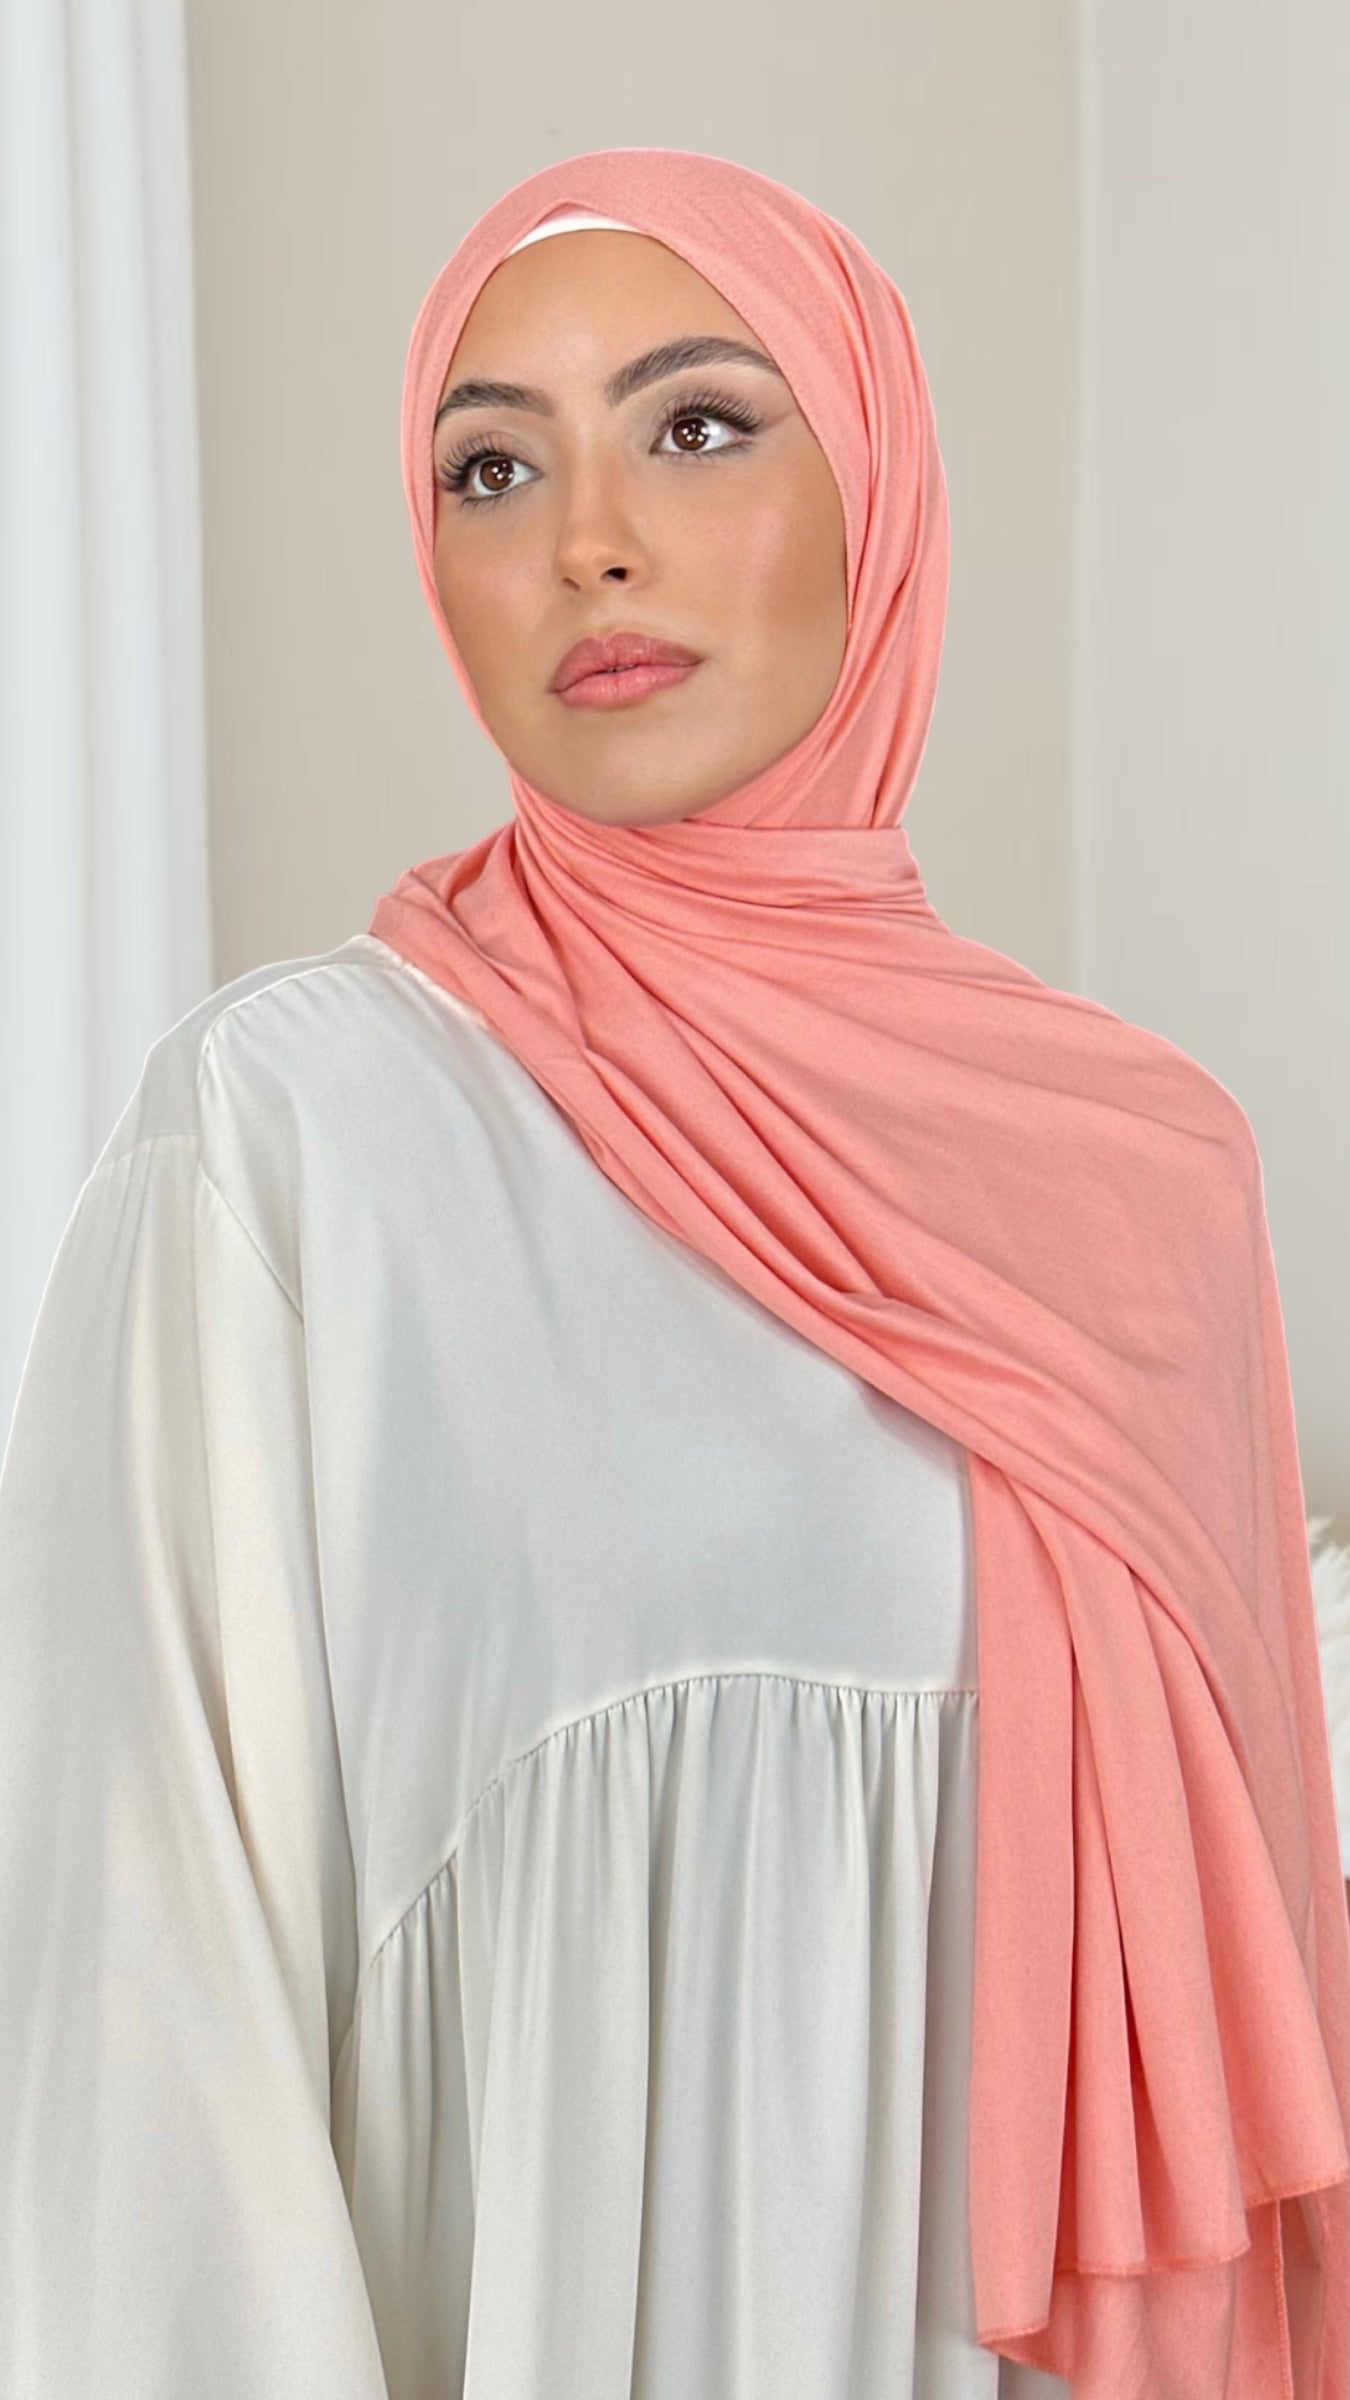 Hijab Jersey salmone - orlo Flatlock - Hijab Paradise Hijab, chador, velo, turbante, foulard, copricapo, musulmano, islamico, sciarpa, 